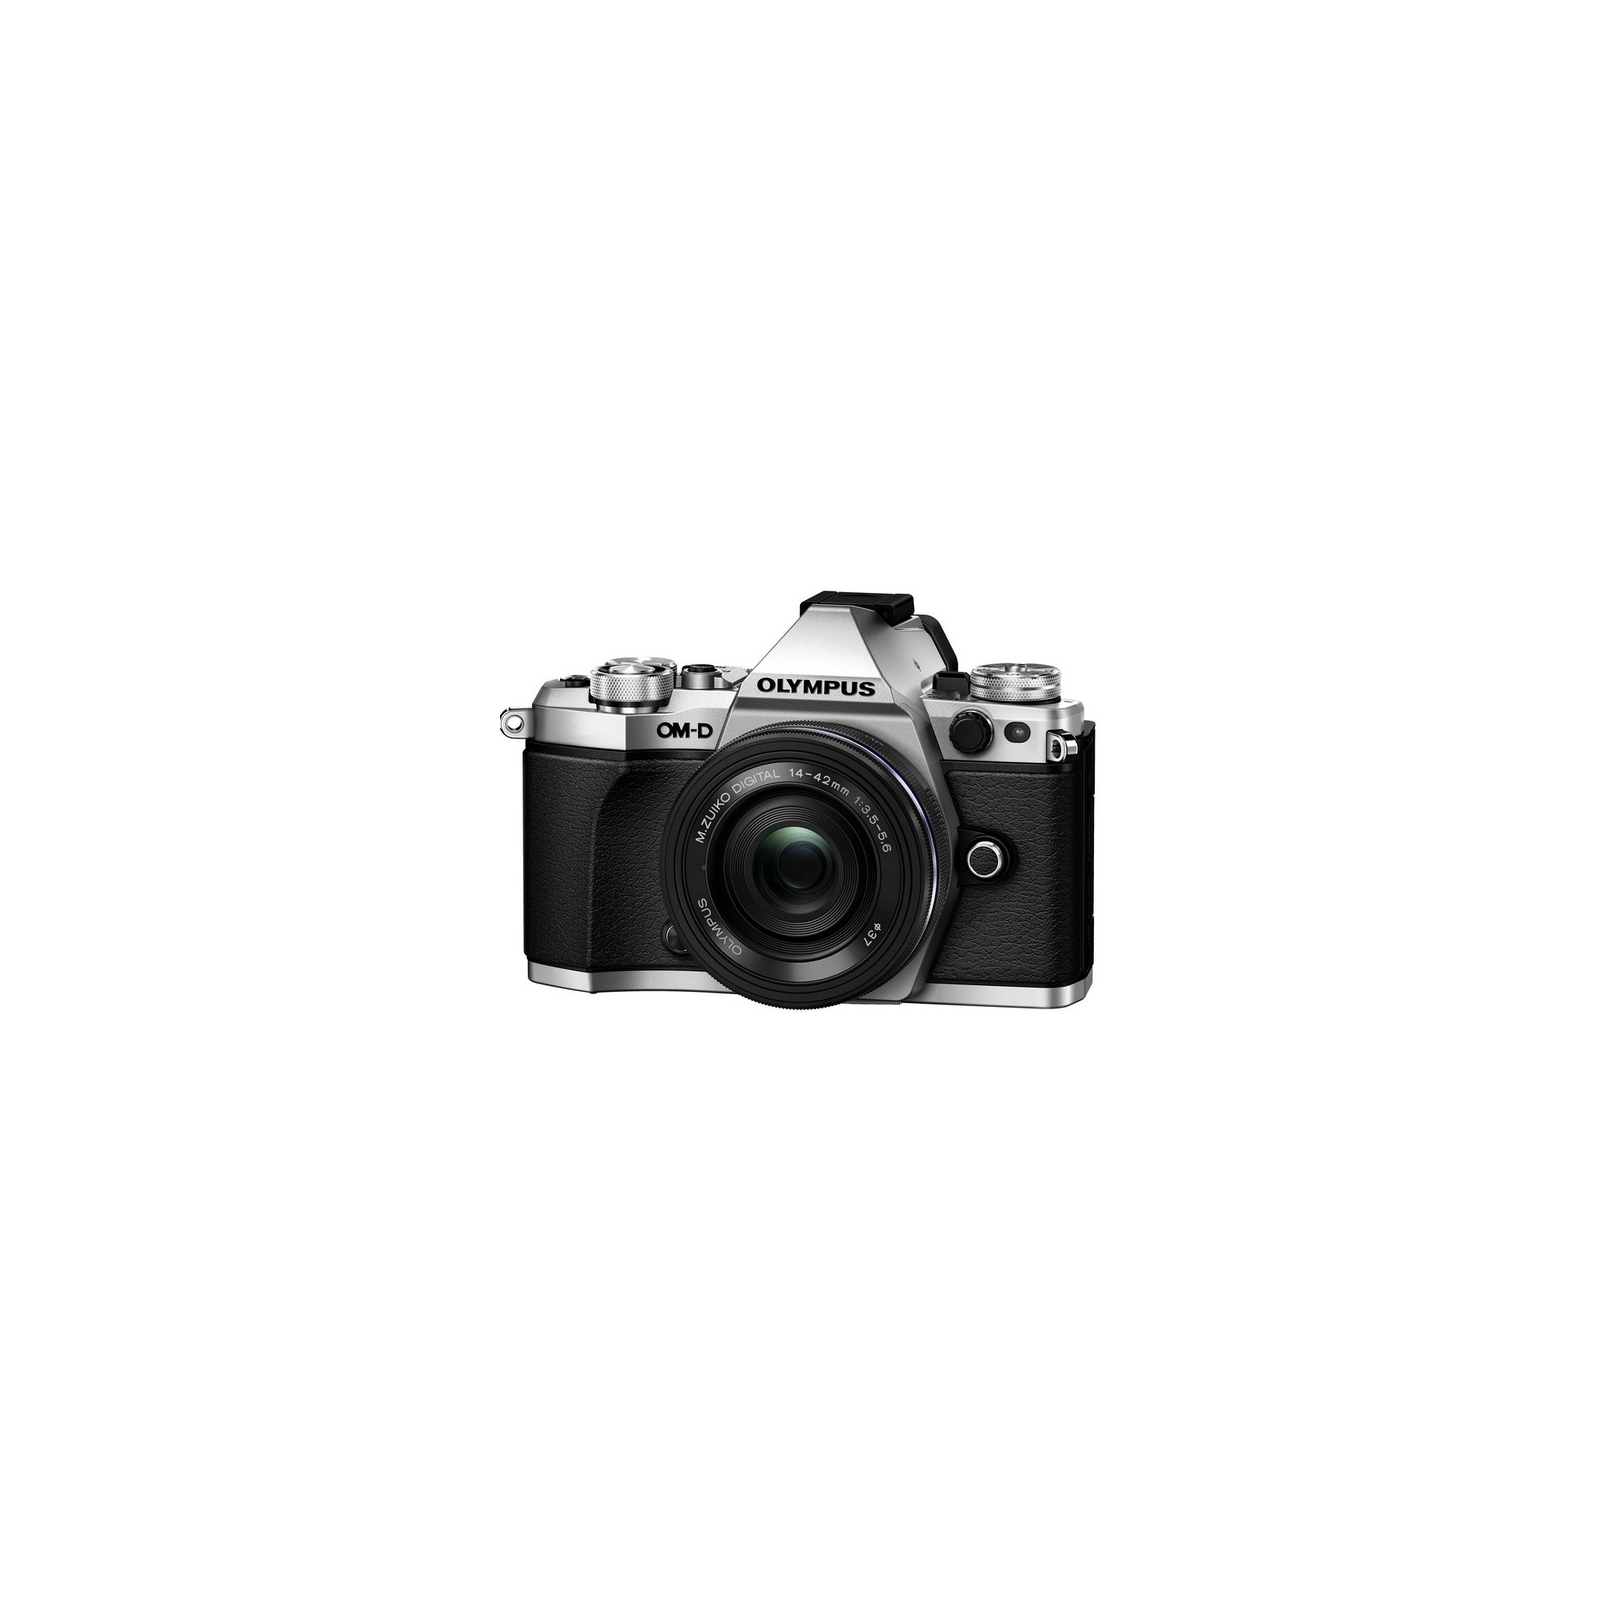 Цифровой фотоаппарат Olympus E-M5 mark II Pancake Zoom 14-42 Kit silver/black (V207044SE000)